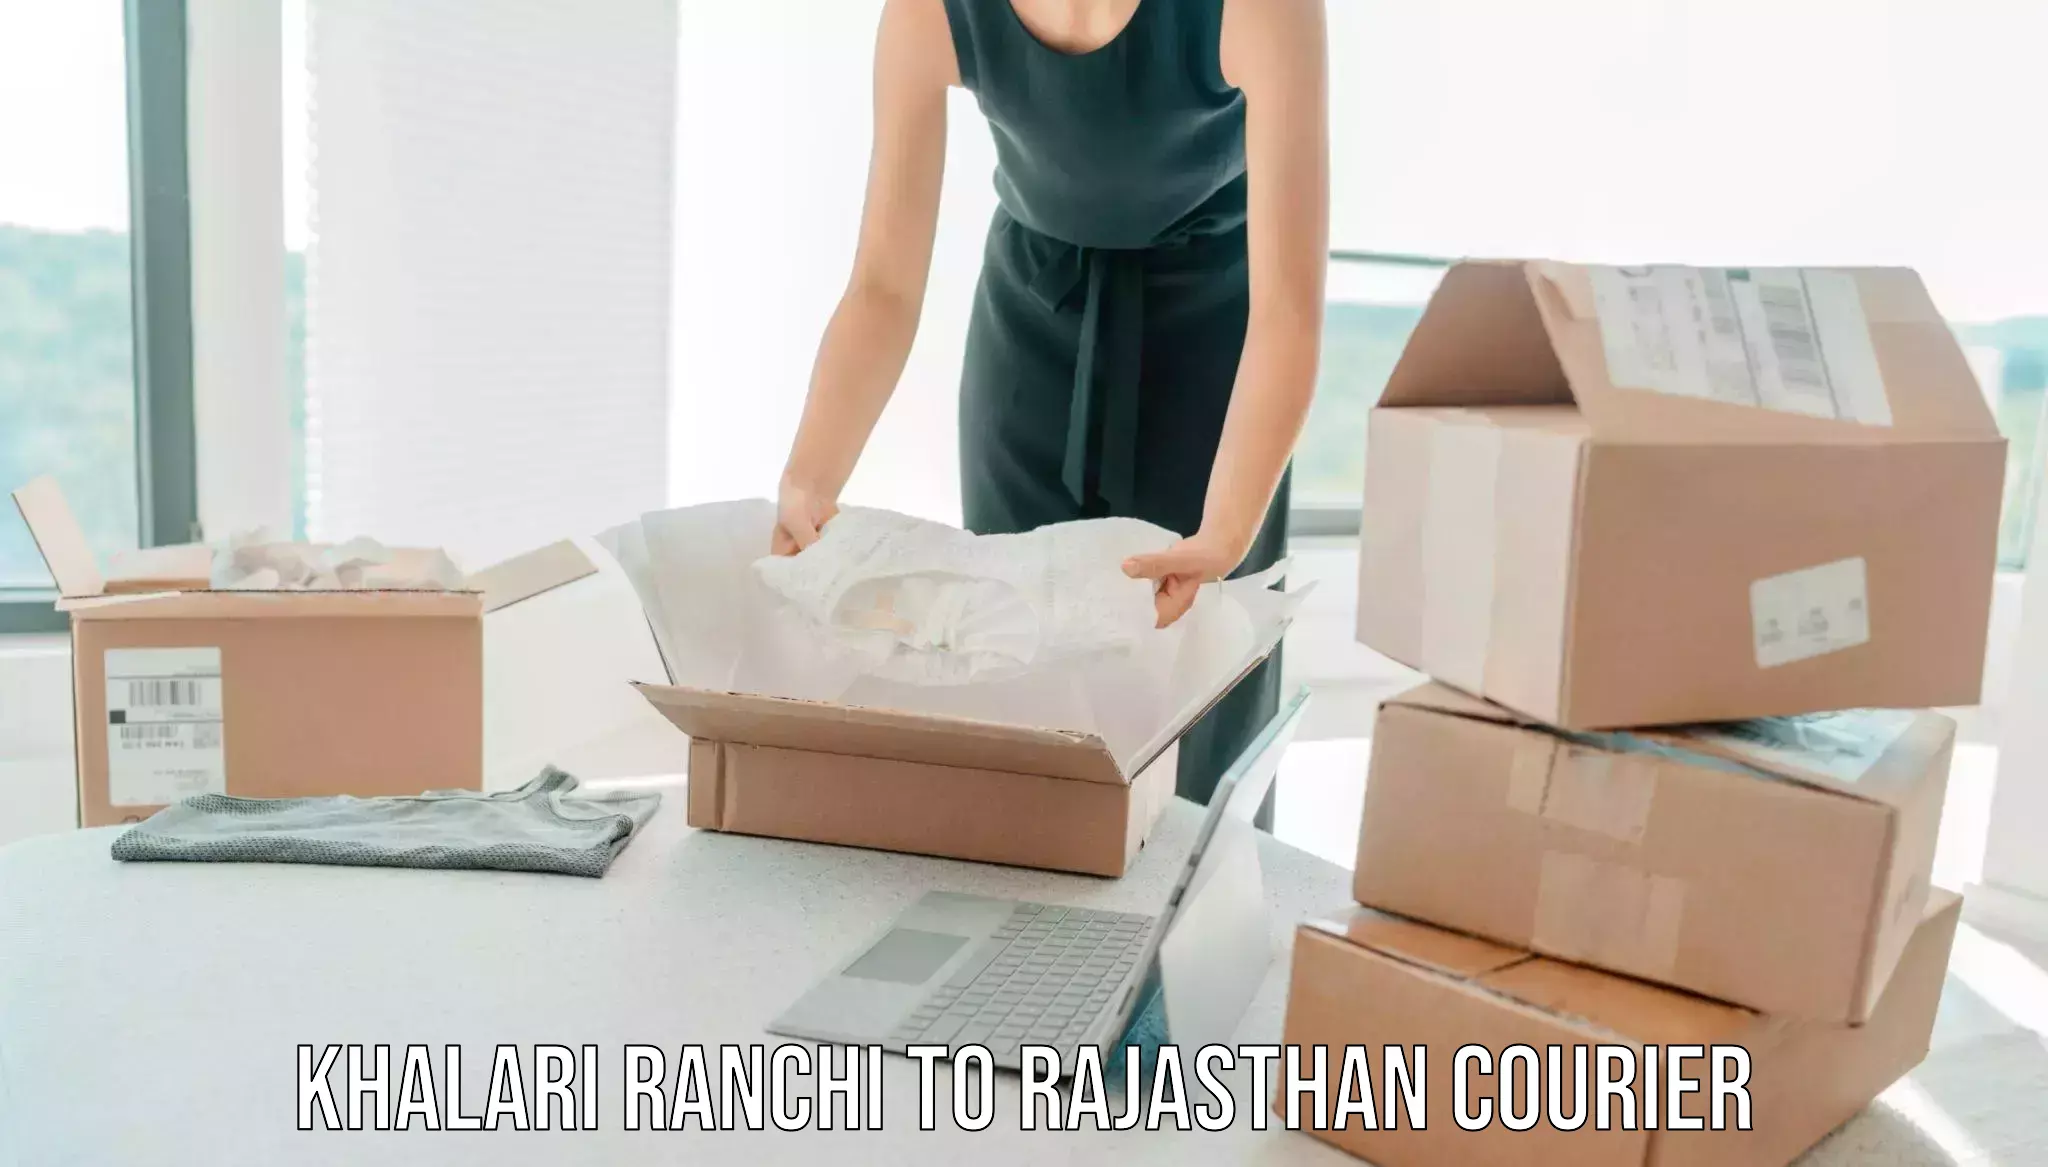 Professional furniture movers Khalari Ranchi to Ajmer